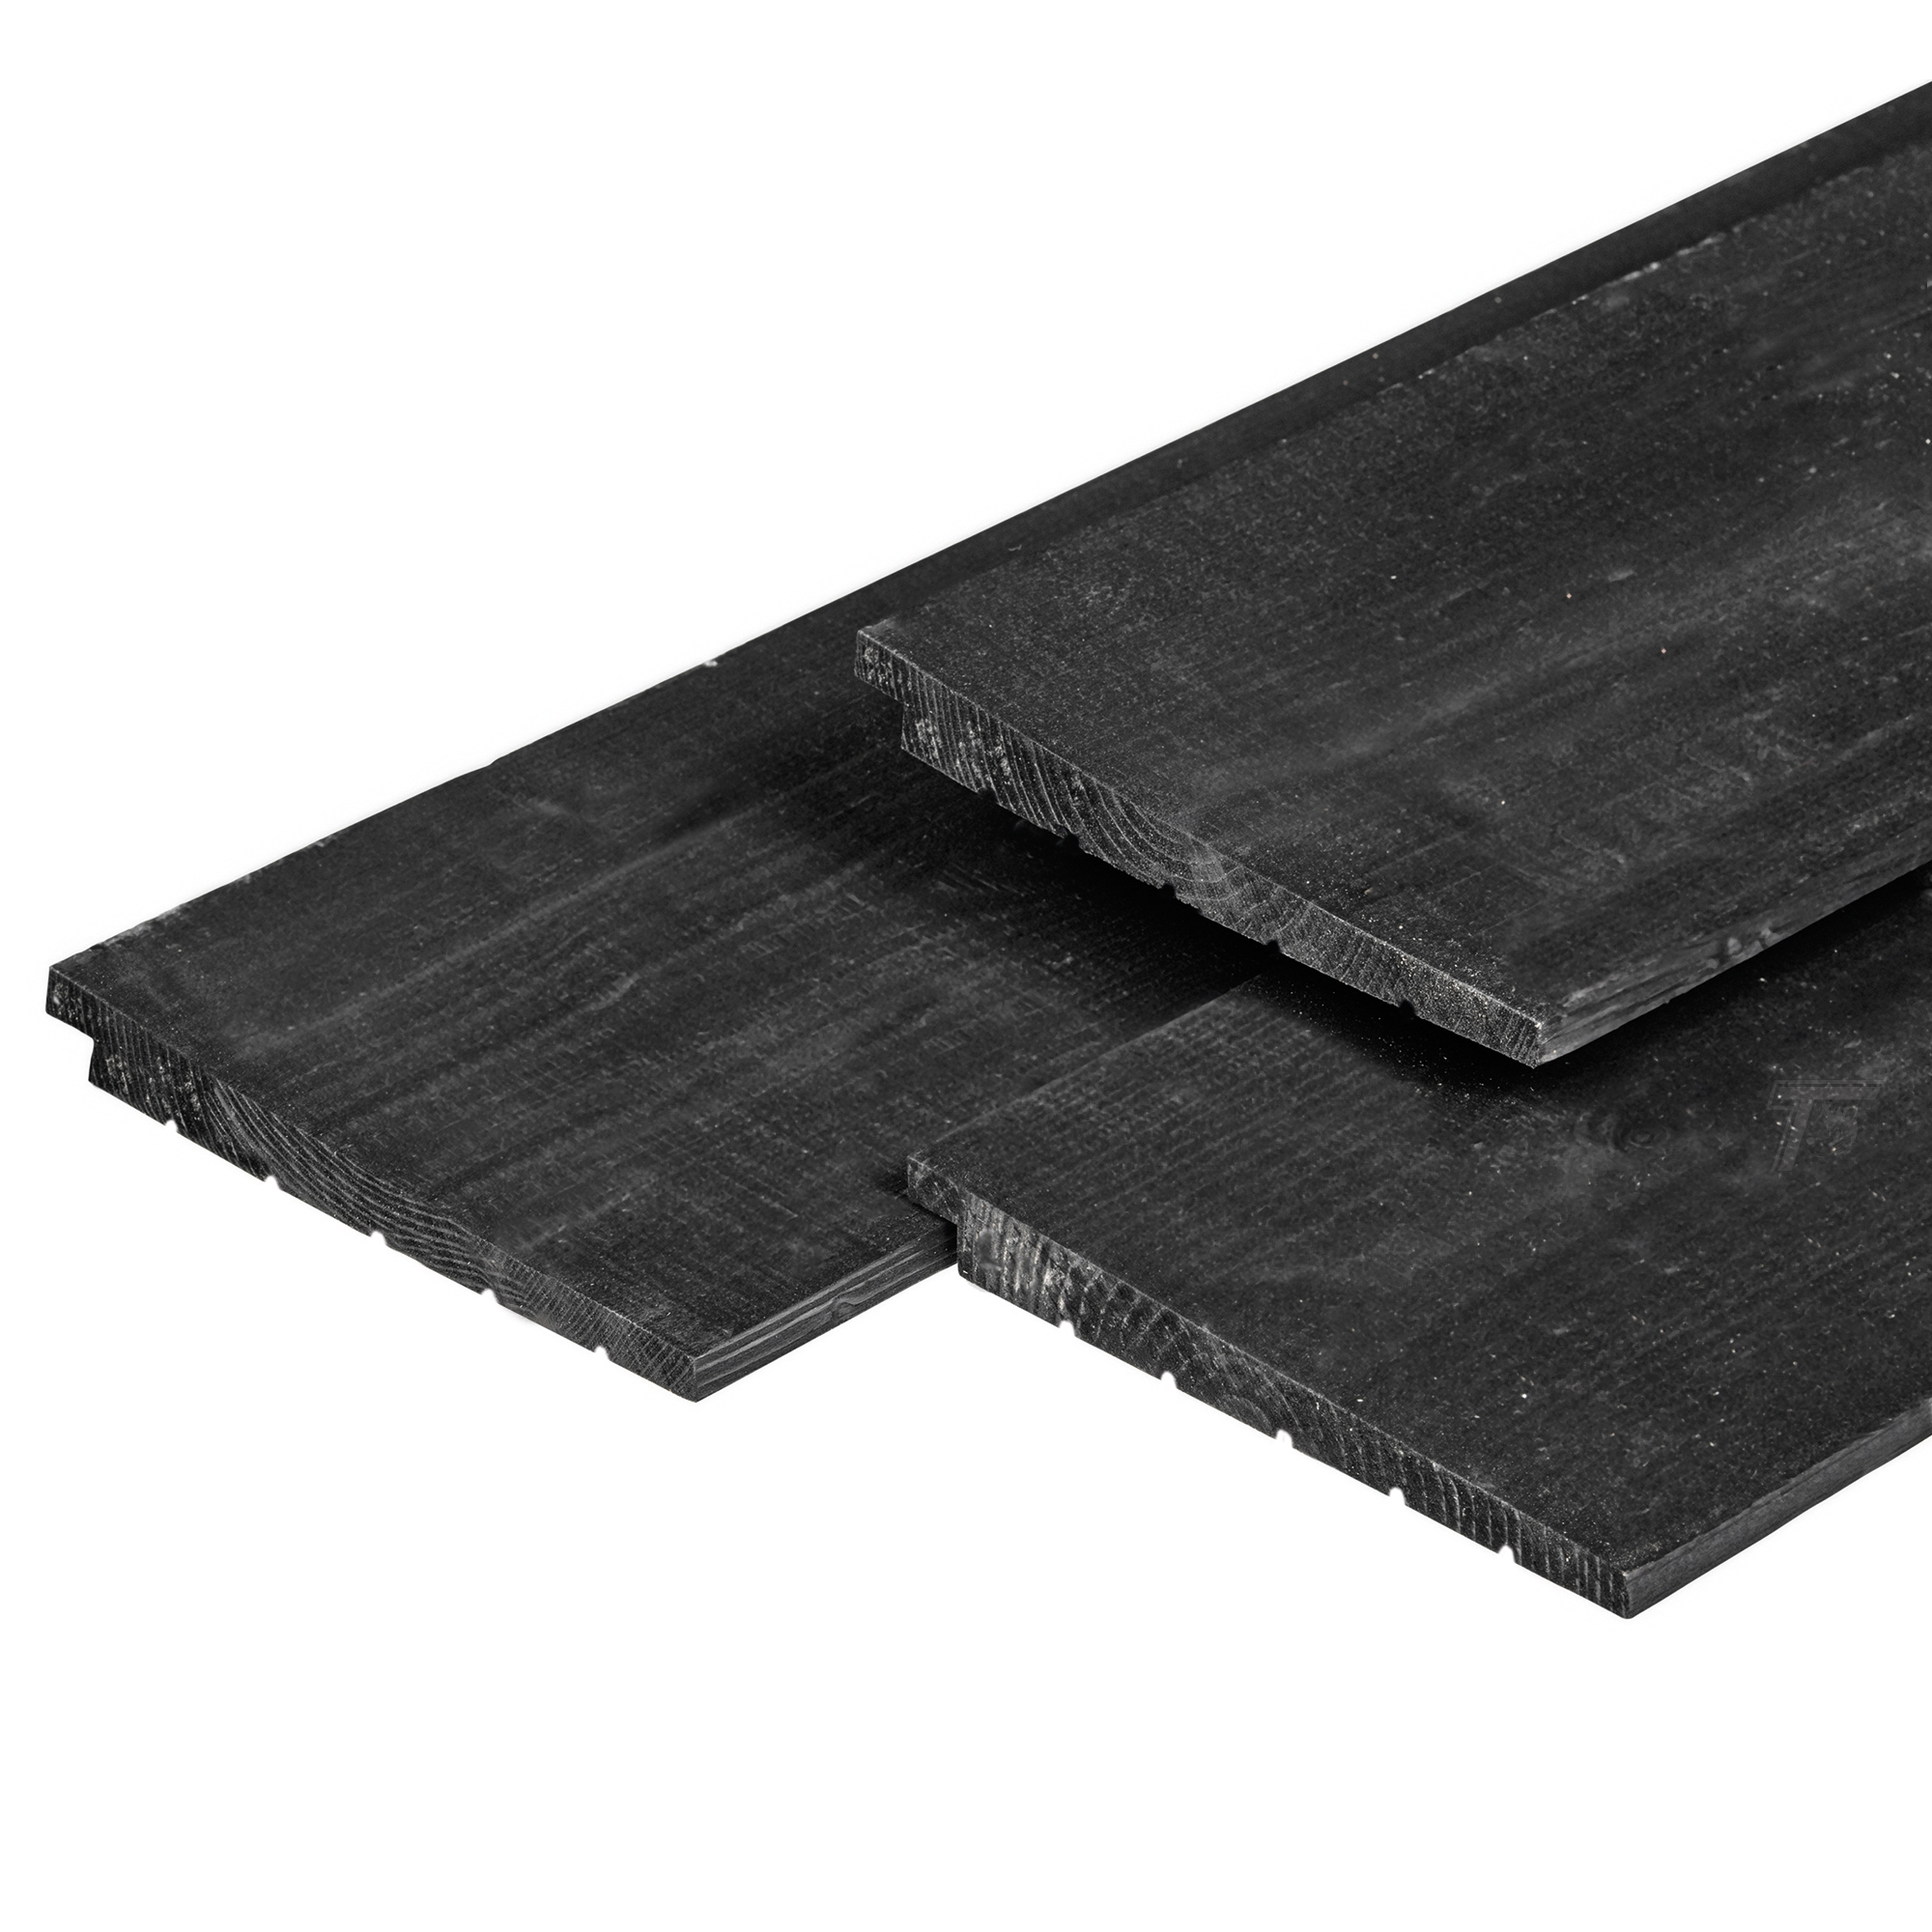 Douglas Zweeds rabat houtpakket zwart geïmpregneerd - beton schutting systeem